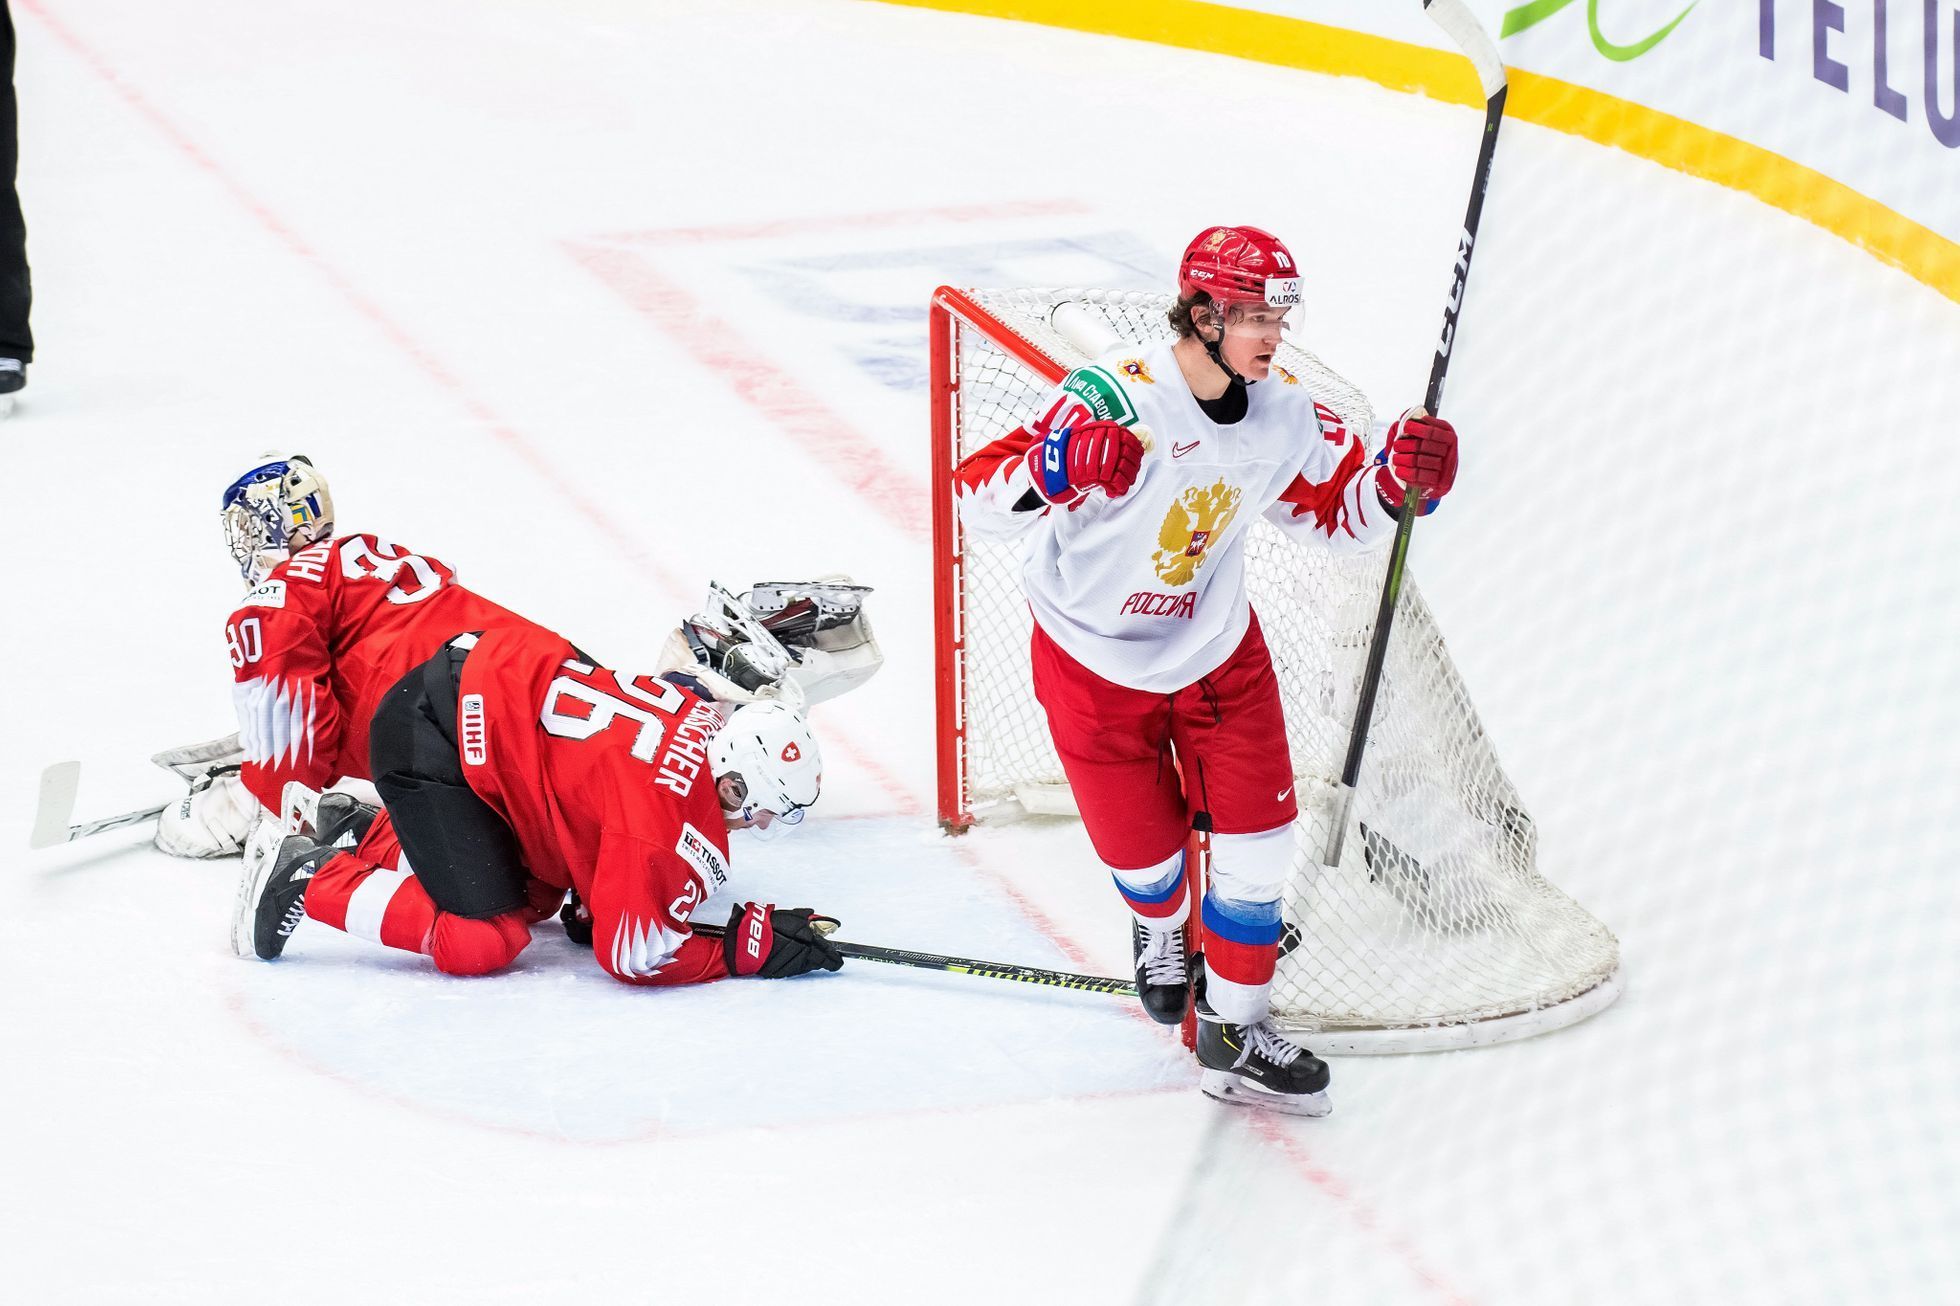 hokej, MS do 20 let, čtvrtfinále, Rusko - Švýcarsko, Dmitrij Voronkov slaví gól